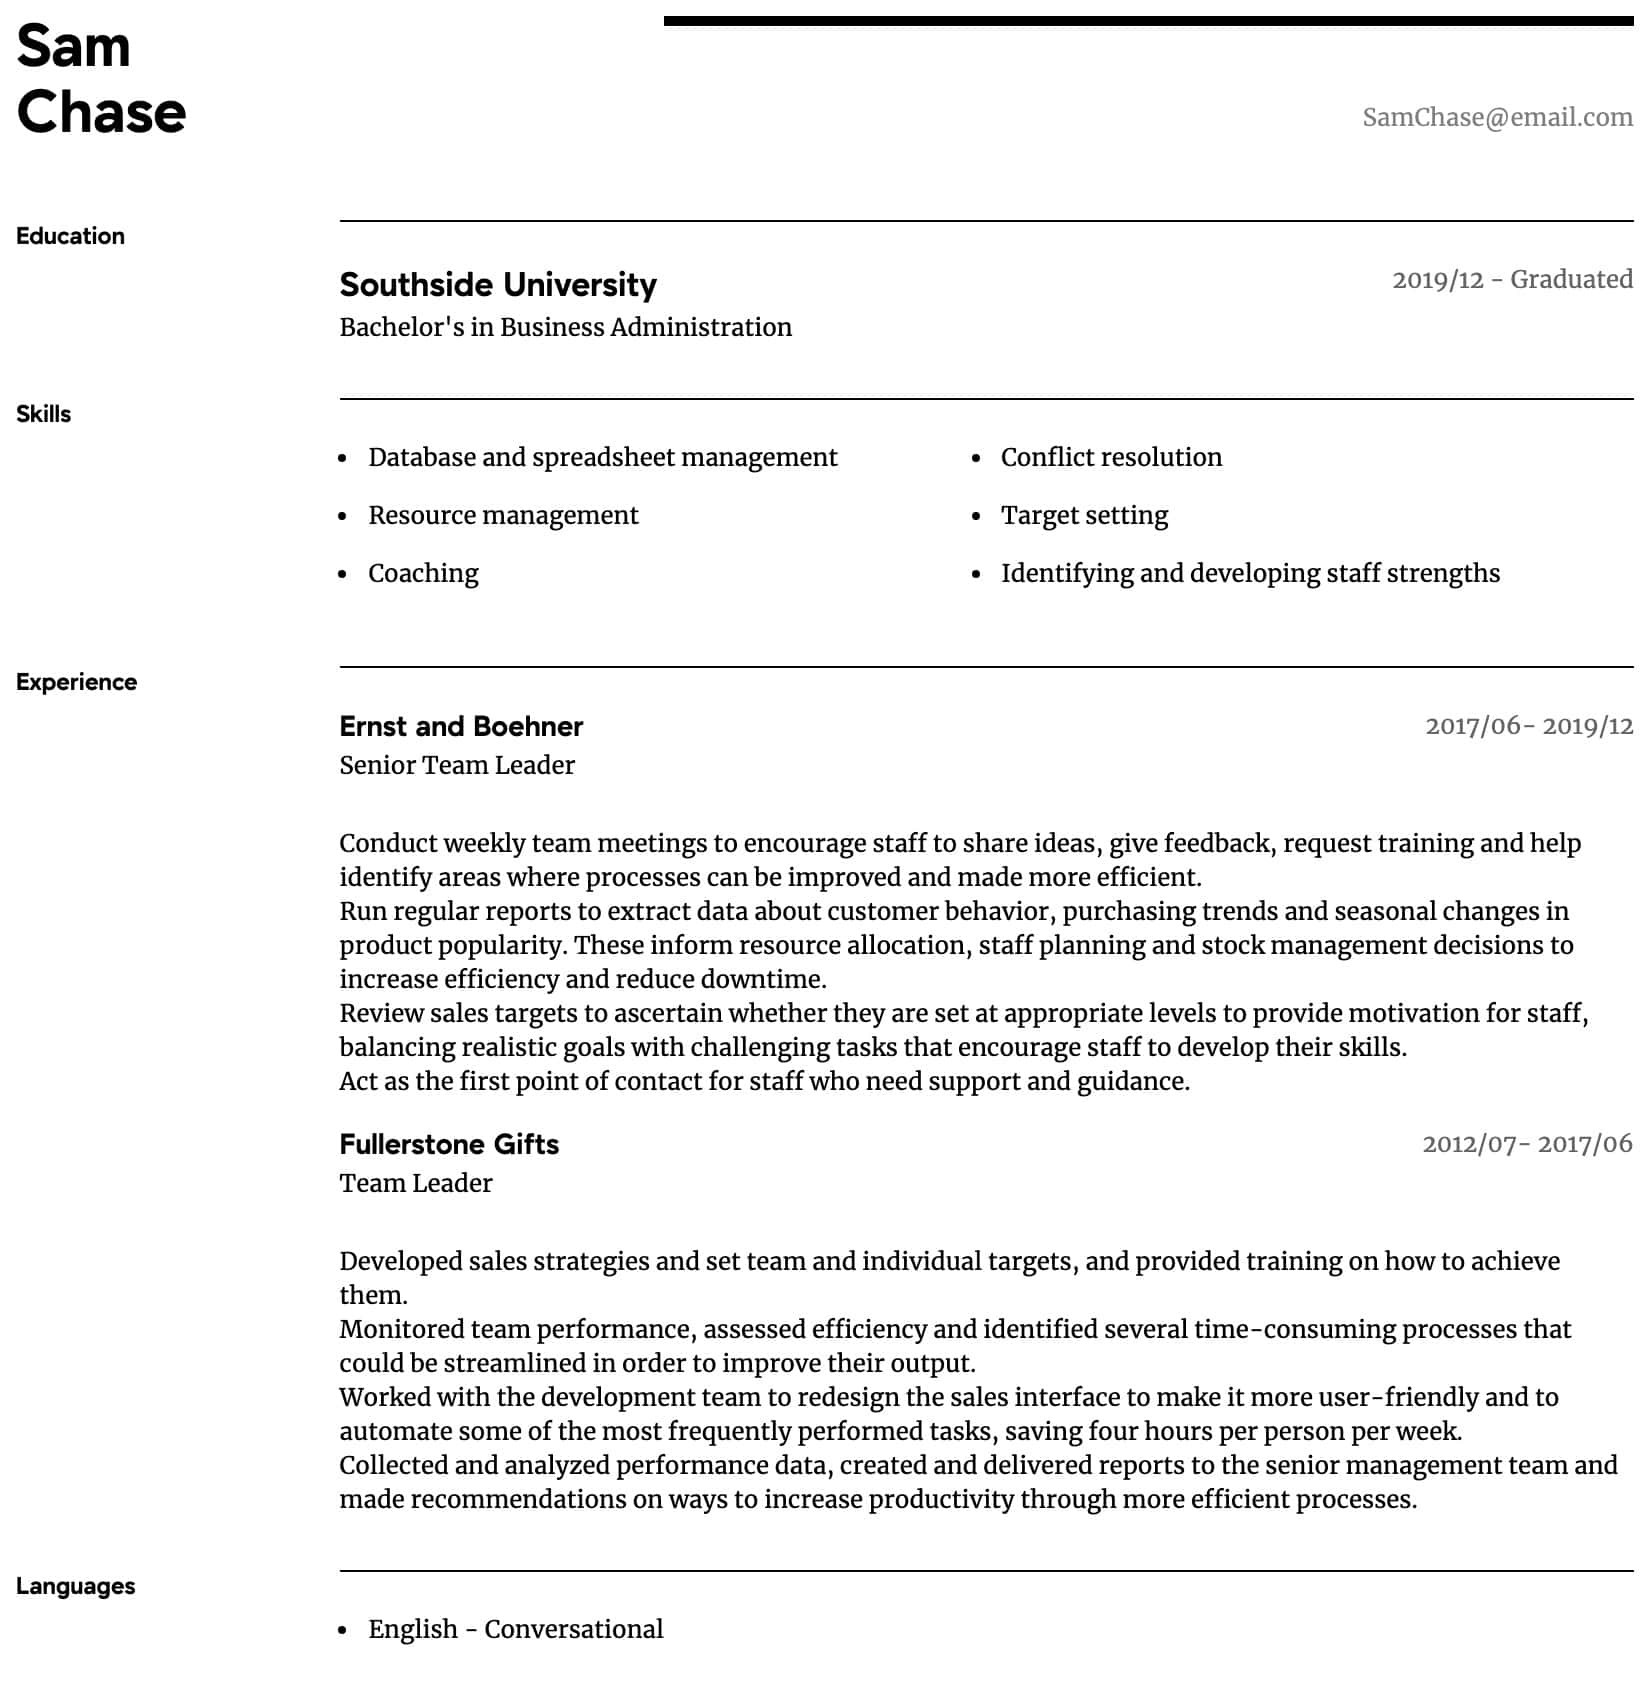 Sample Resume for Customer Service Team Leader Team Leader Resume Samples All Experience Levels Resume.com …